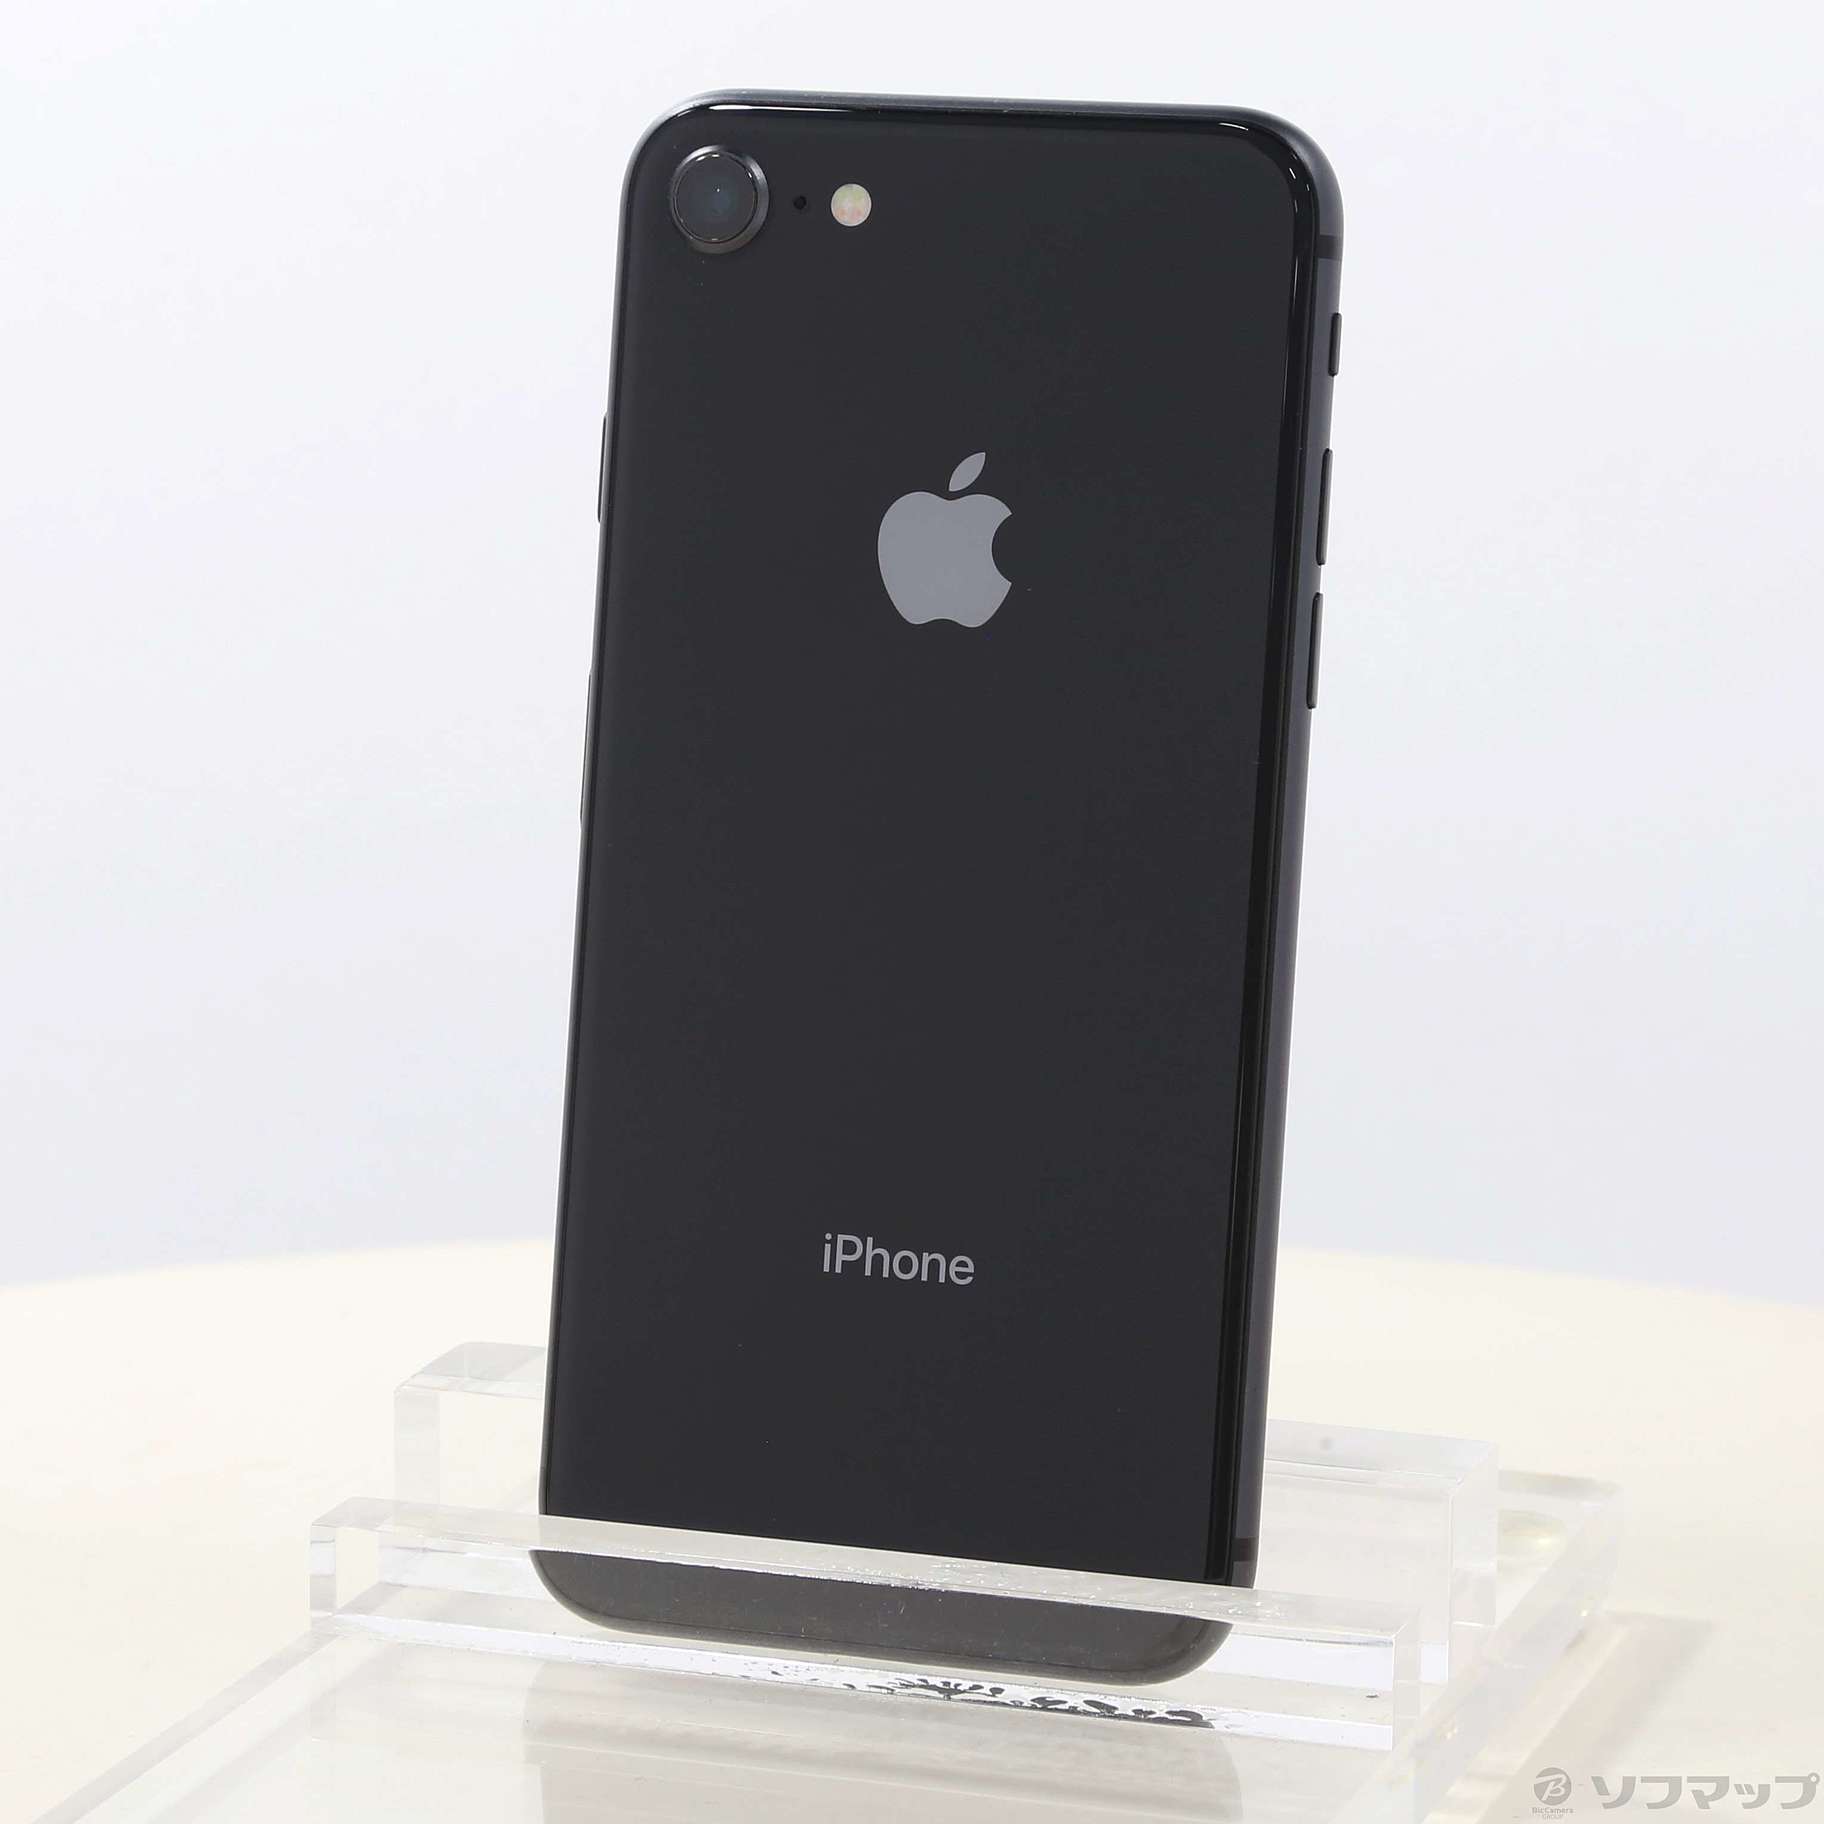 iPhone8 64GB SIMフリー スペースグレー - スマートフォン本体